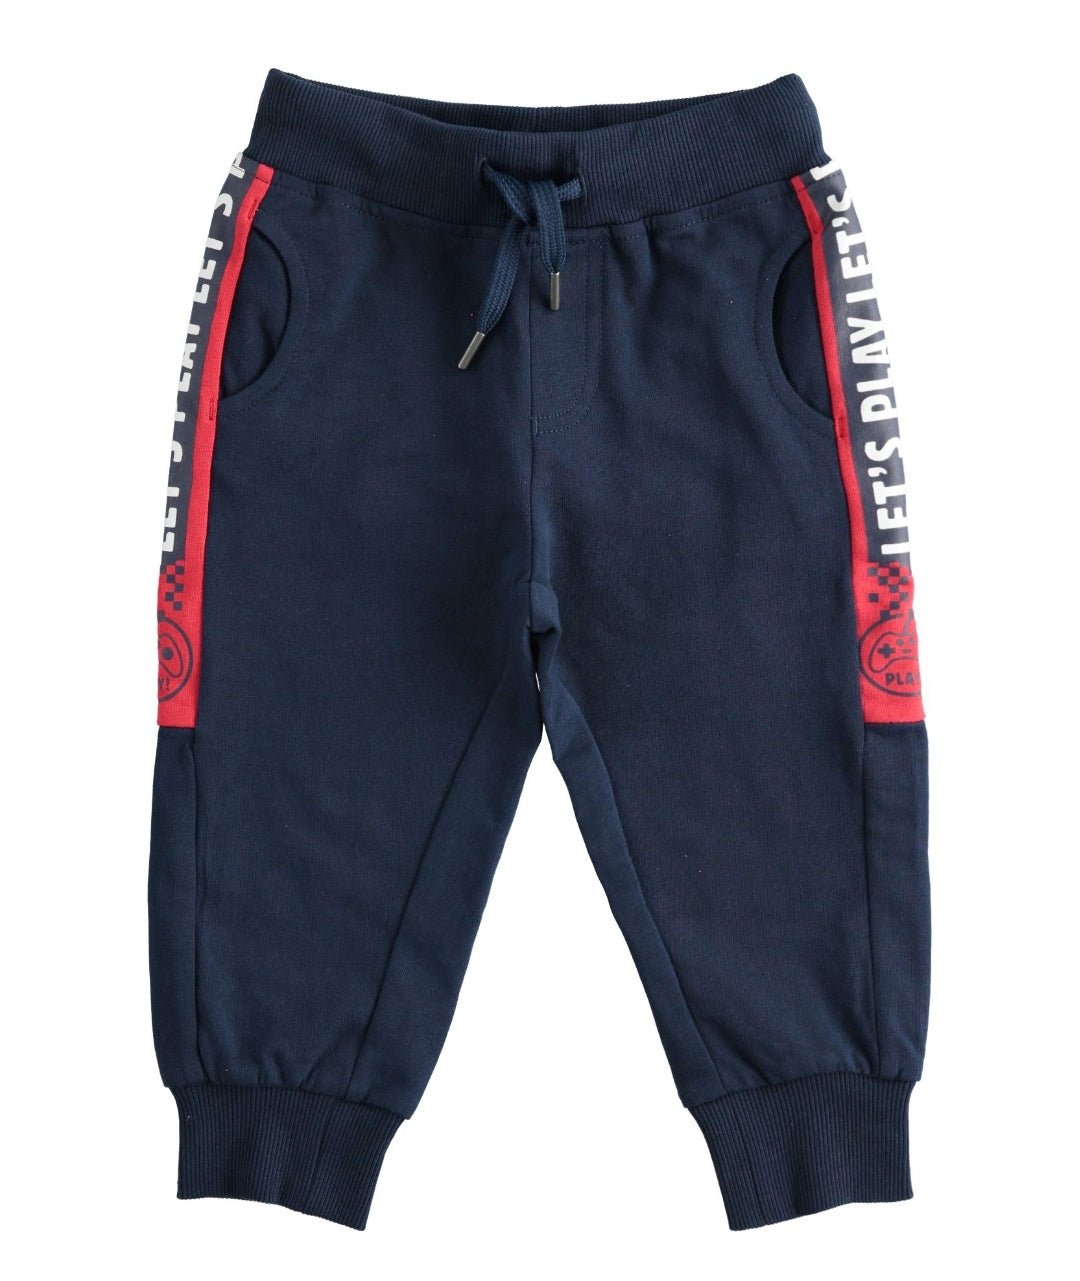 Pantalone in felpa garzata - Coccole e Ricami |email: info@coccoleericami.shop| P.Iva 09642670583